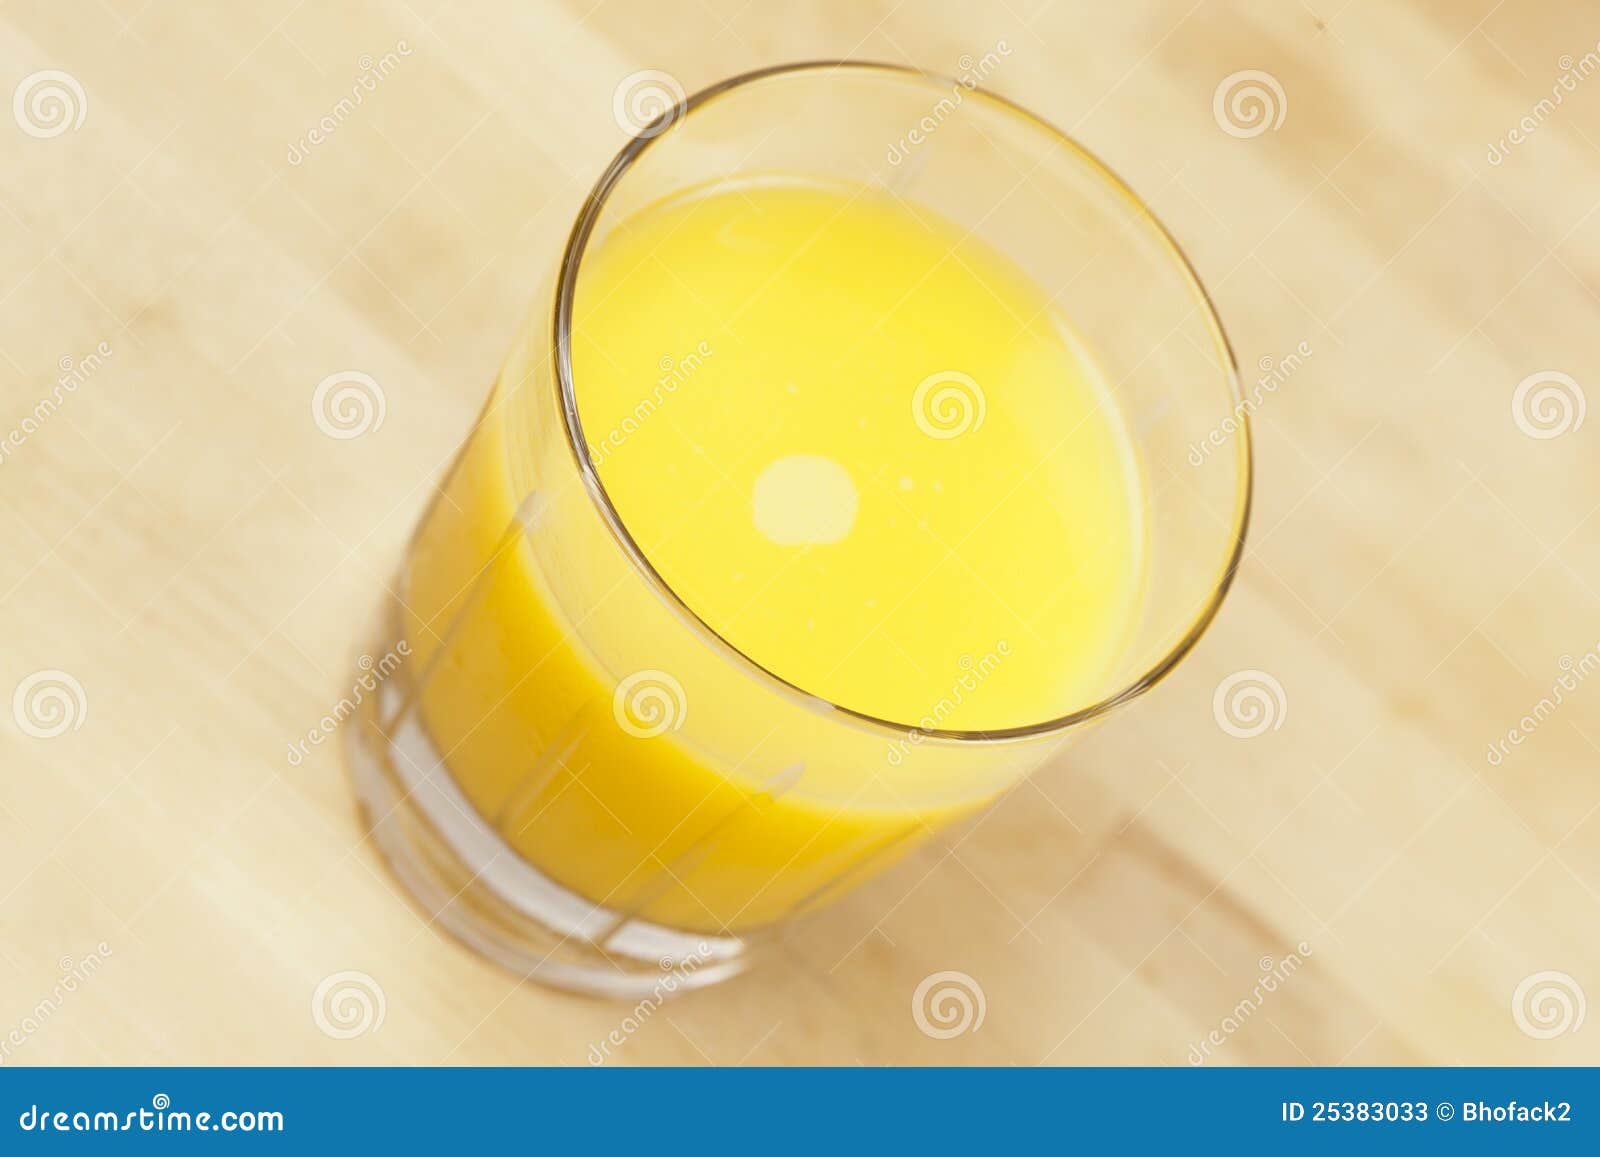 Fresh Squeezed Orange Juice Stock Image - Image of breakfast, food